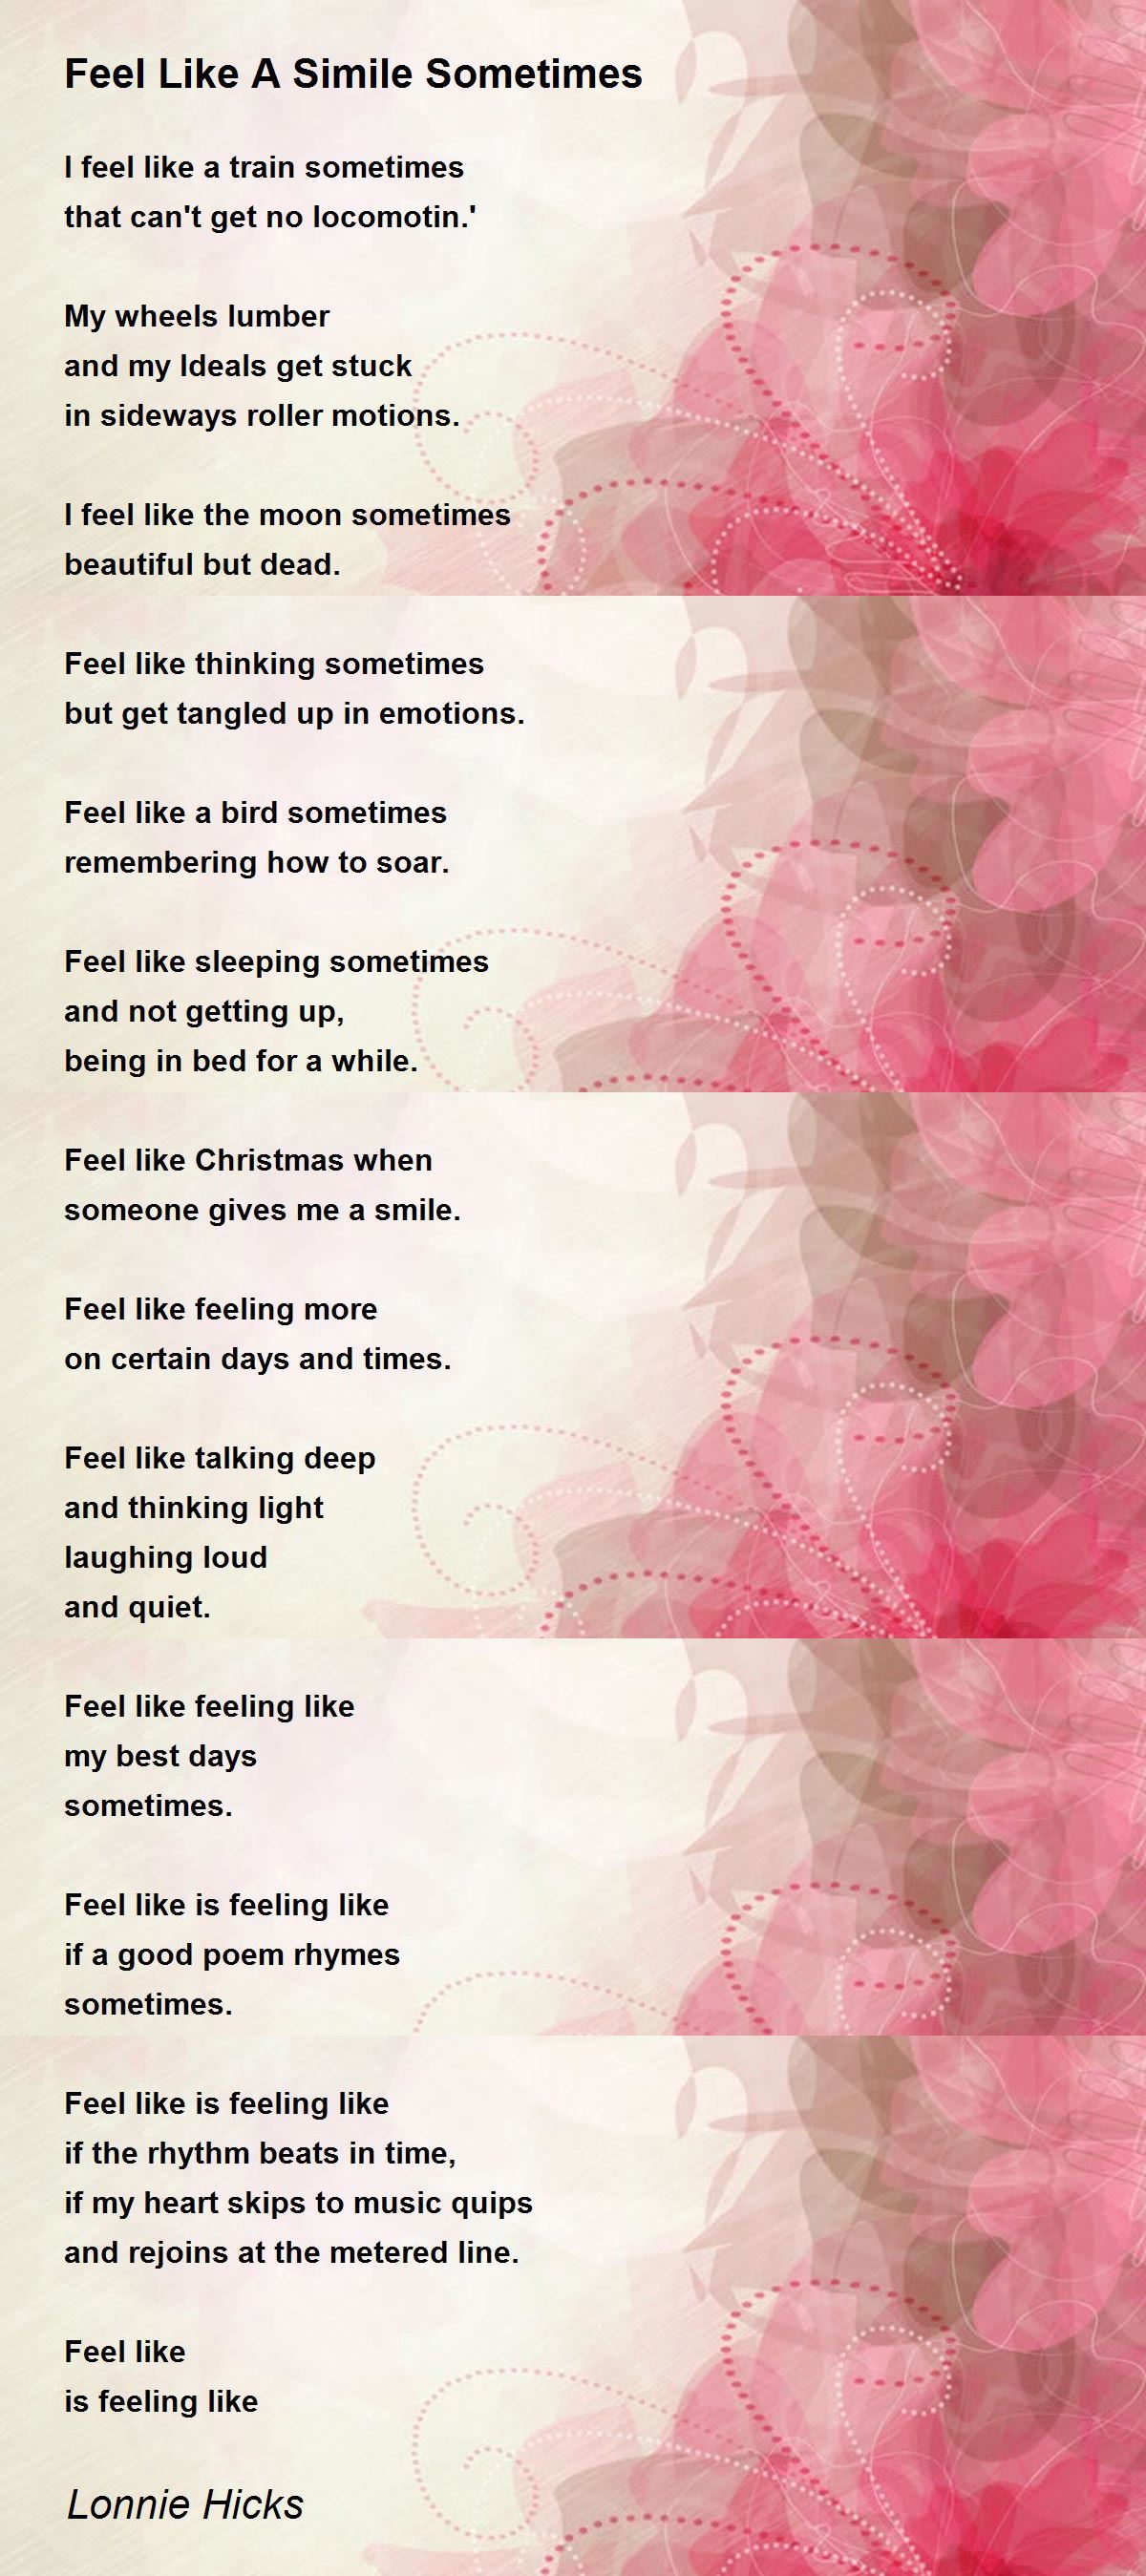 Feel Like A Simile Sometimes Poem by Lonnie Hicks - Poem Hunter